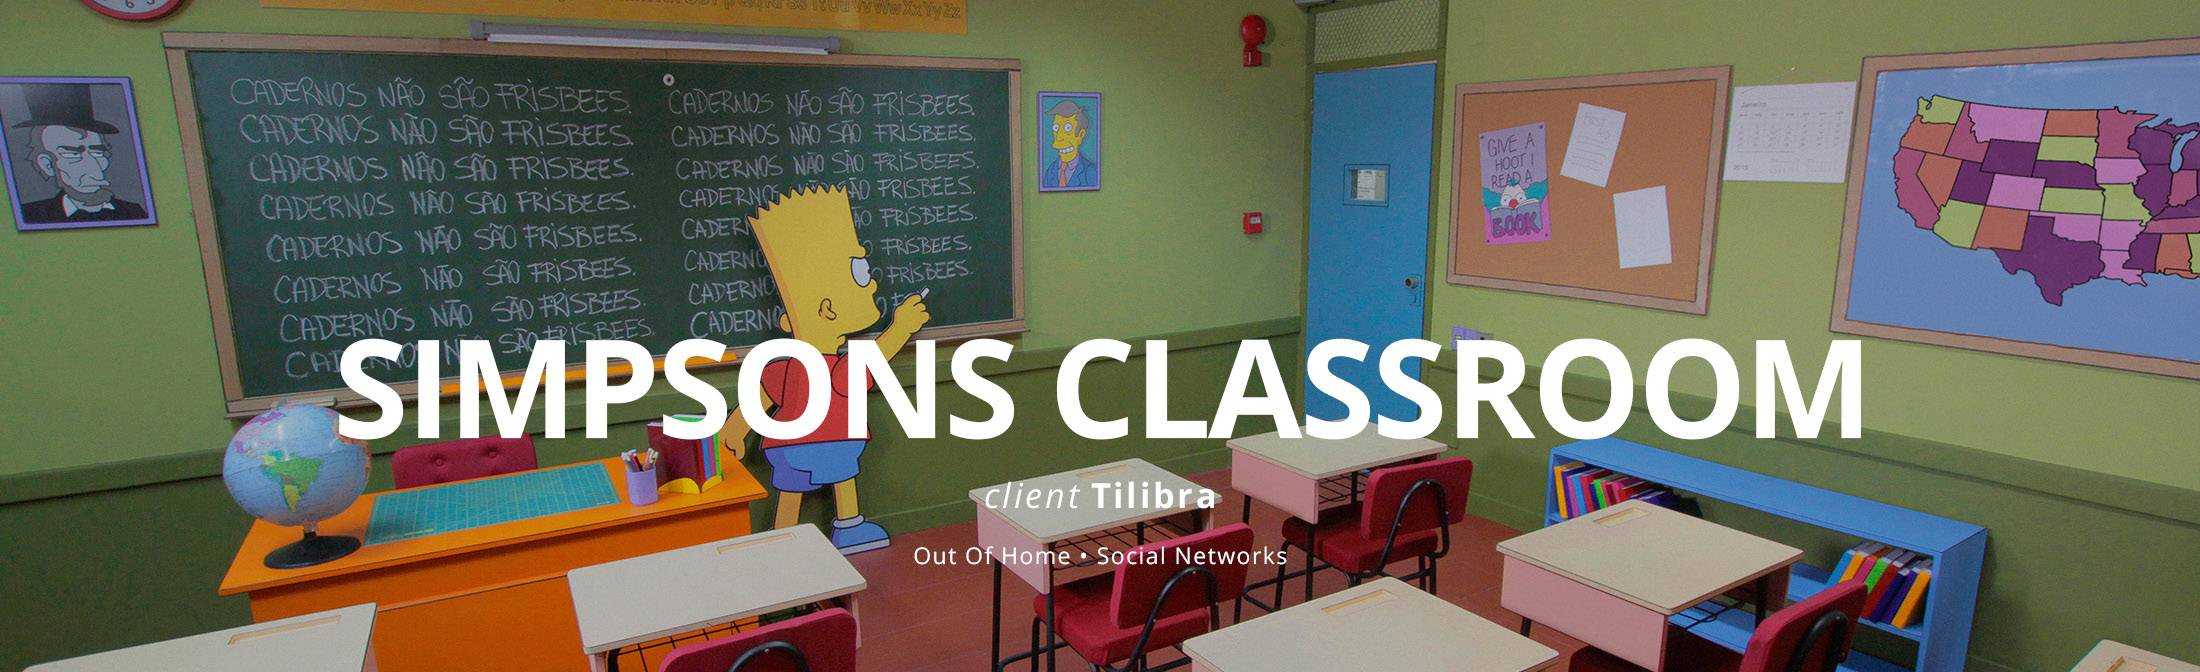 SimpsonsClassroom_02